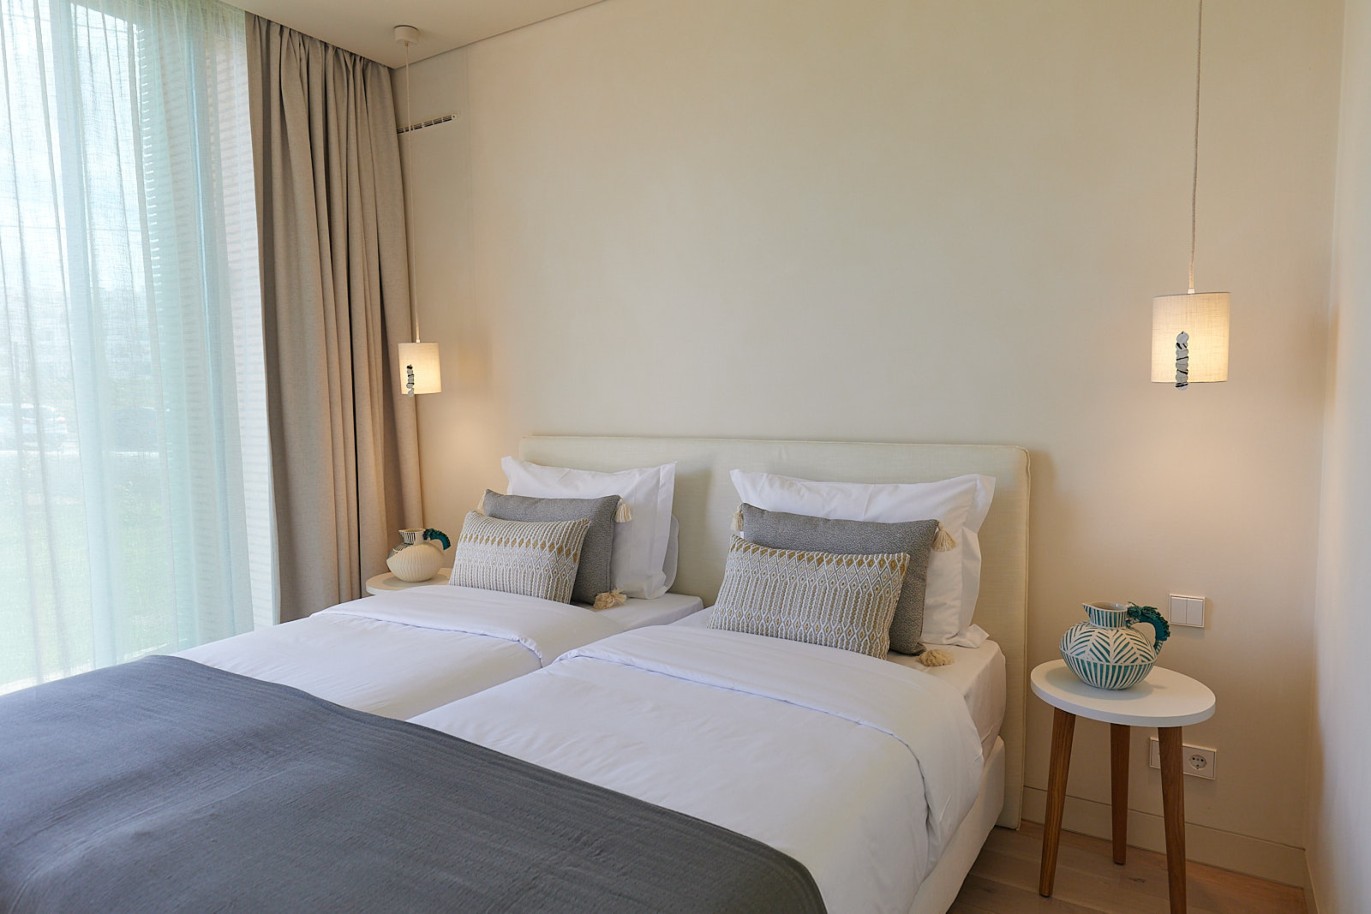 2 bedroom apartment in resort, for sale in Porches, Algarve_230679